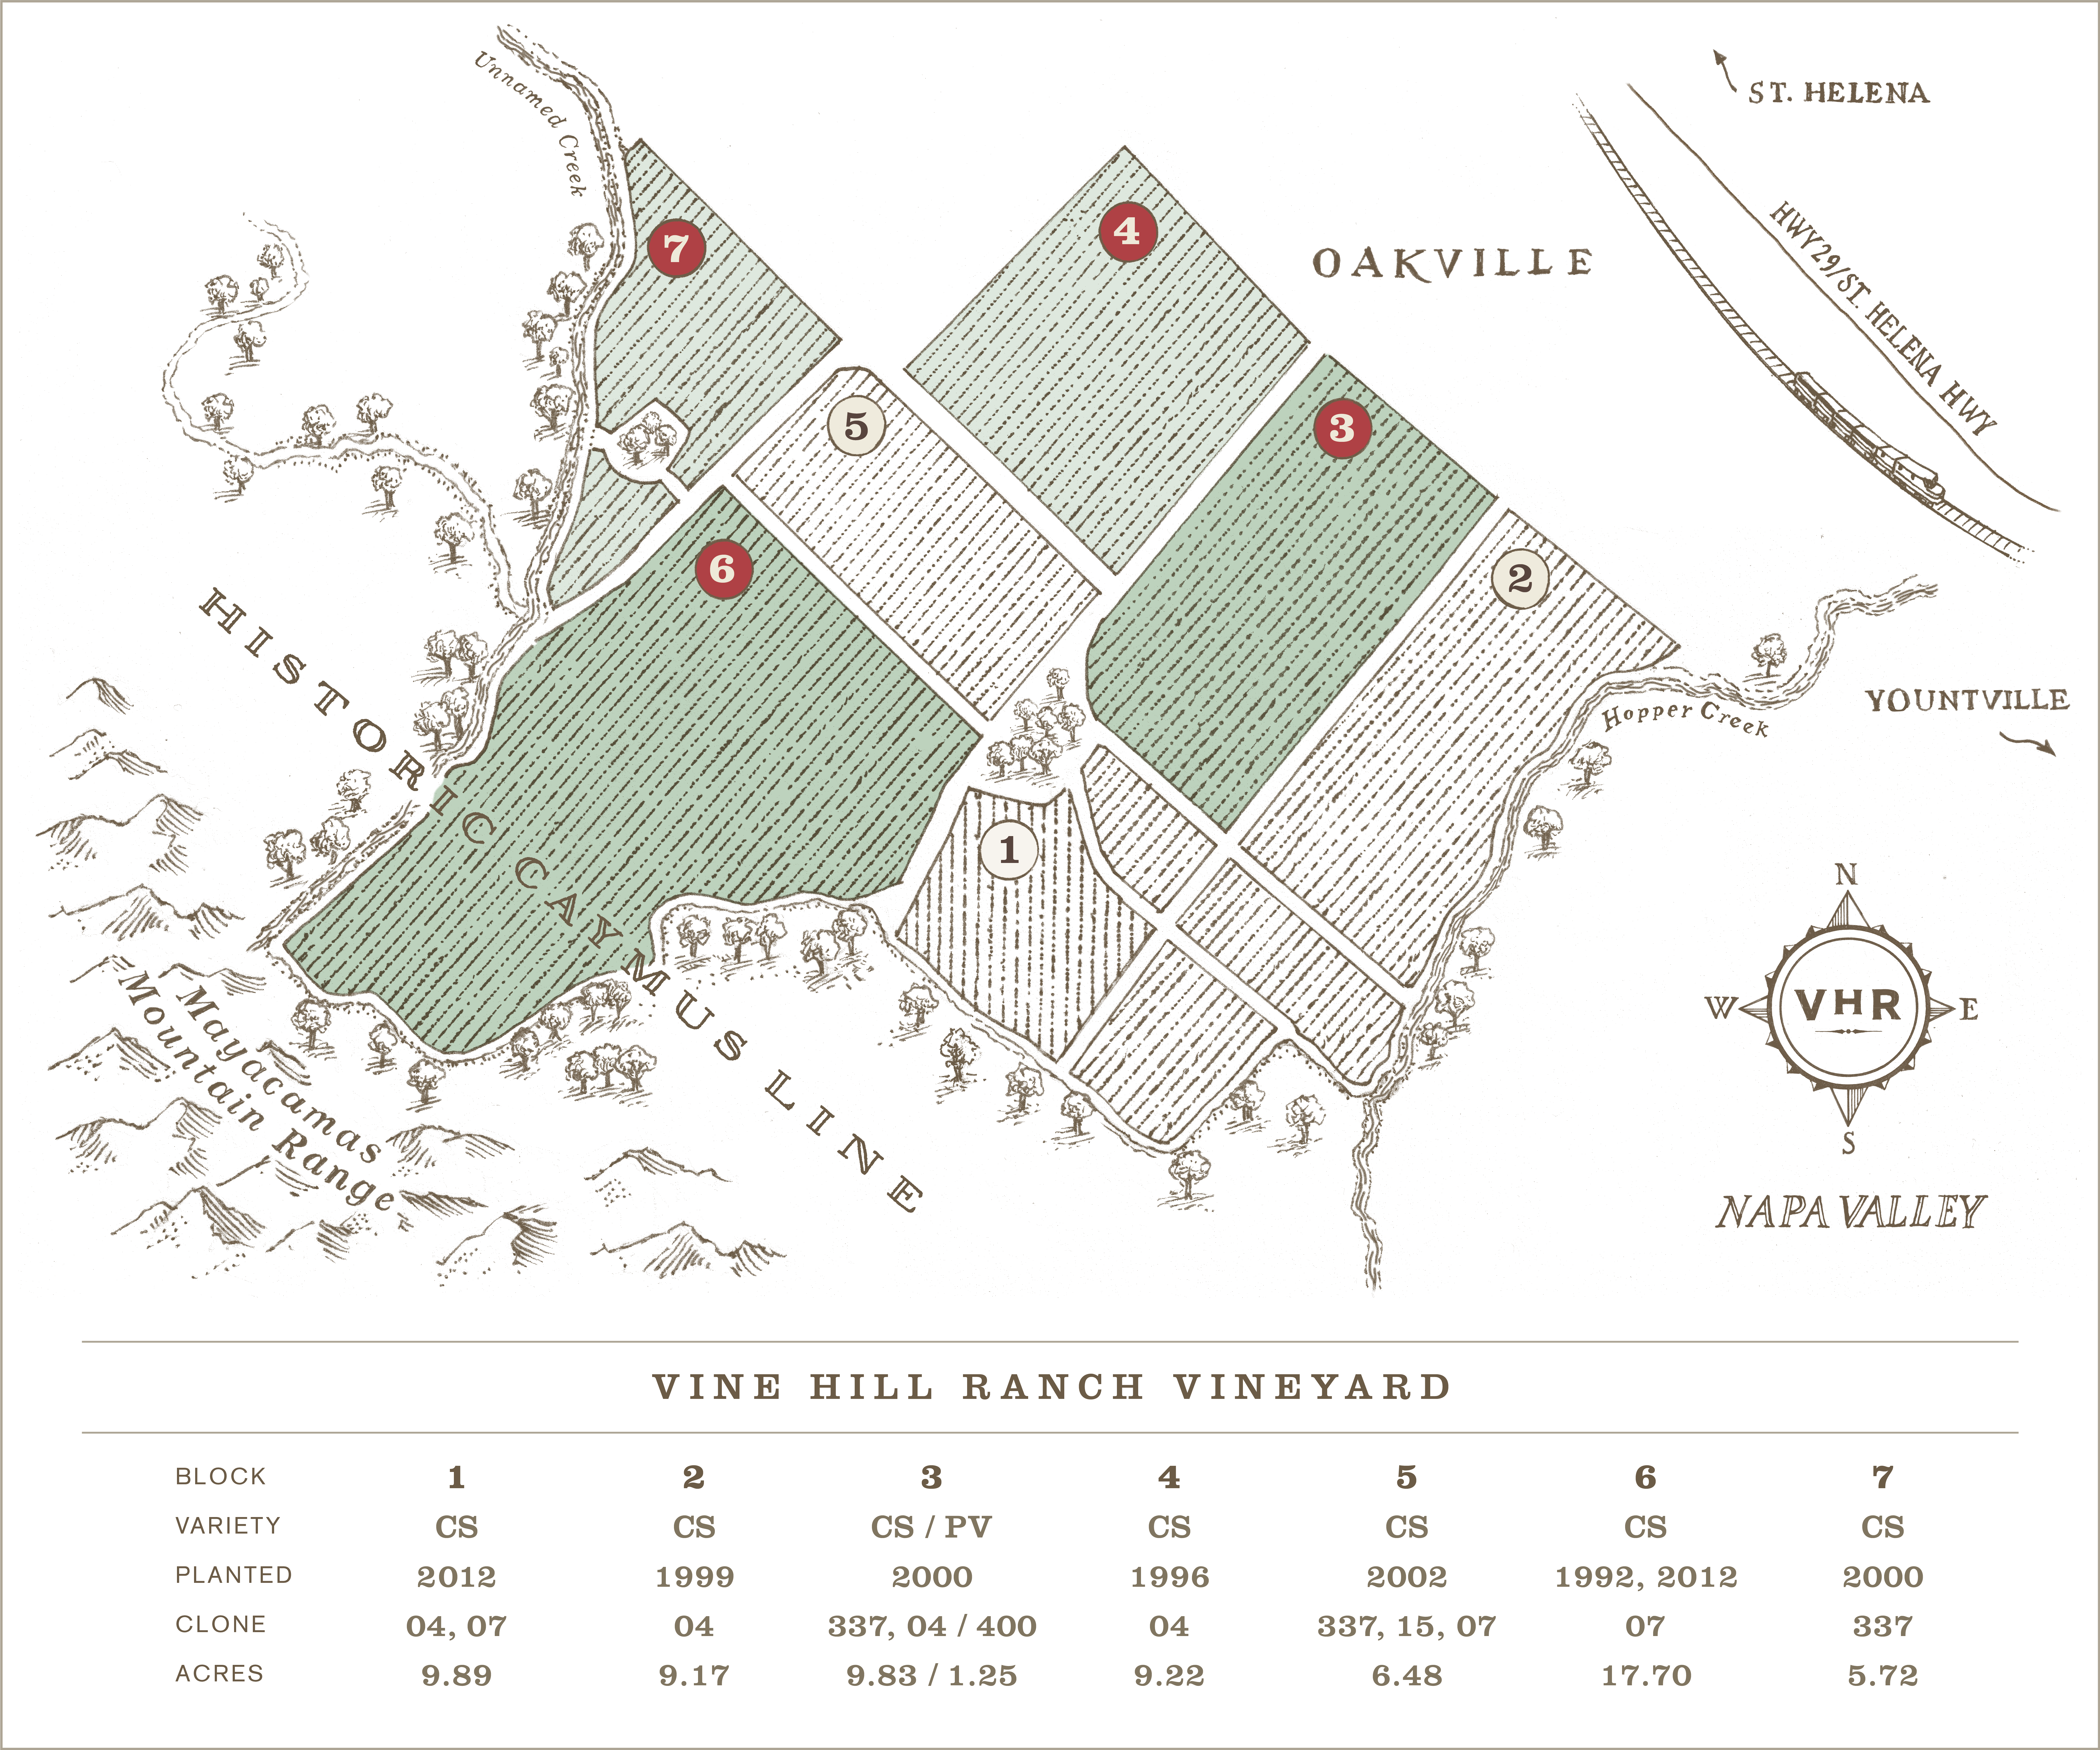 vineyard map plots: 3, 4, 6, 7